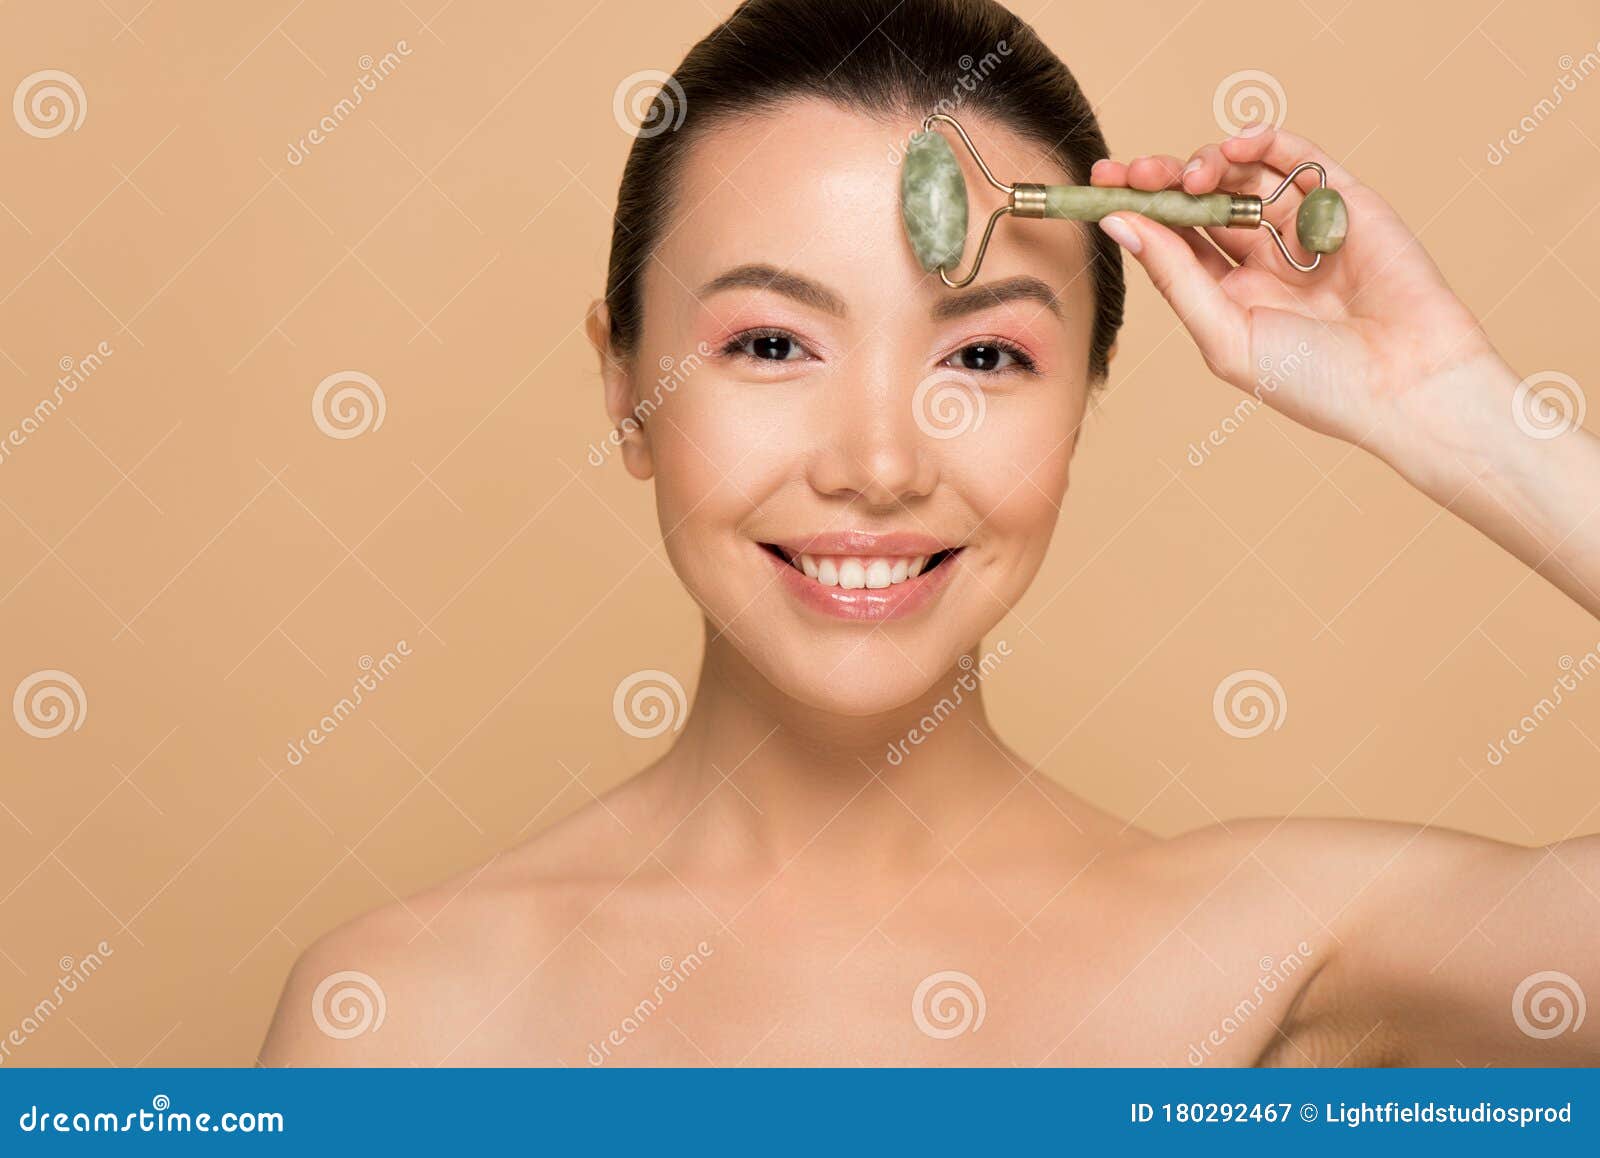 голая женщина делает массаж